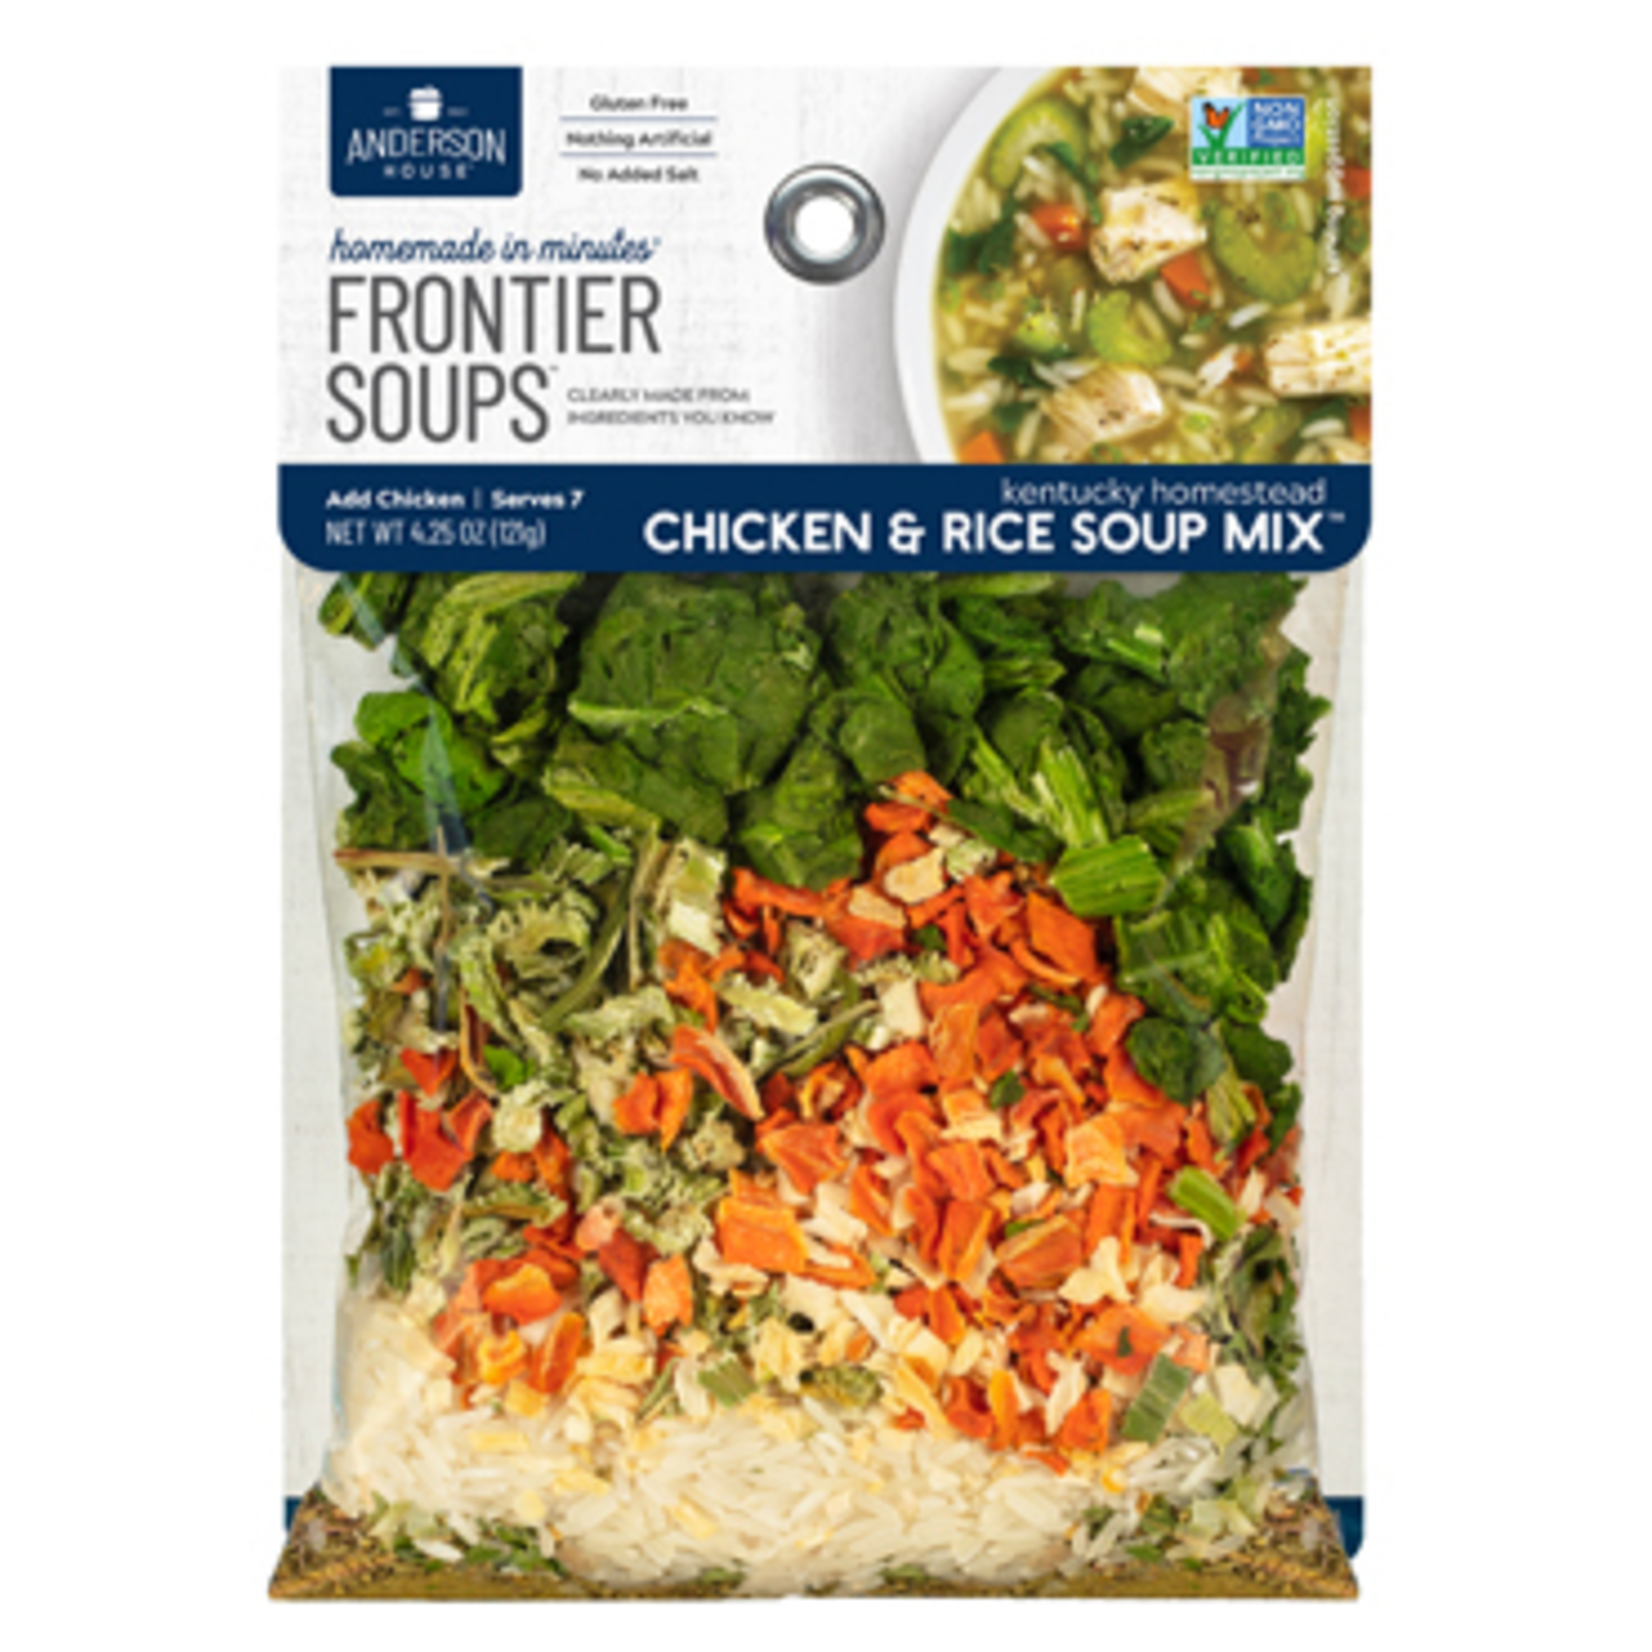 Frontier Soups Kentucky Homestead Chicken & Rice Soup Mix